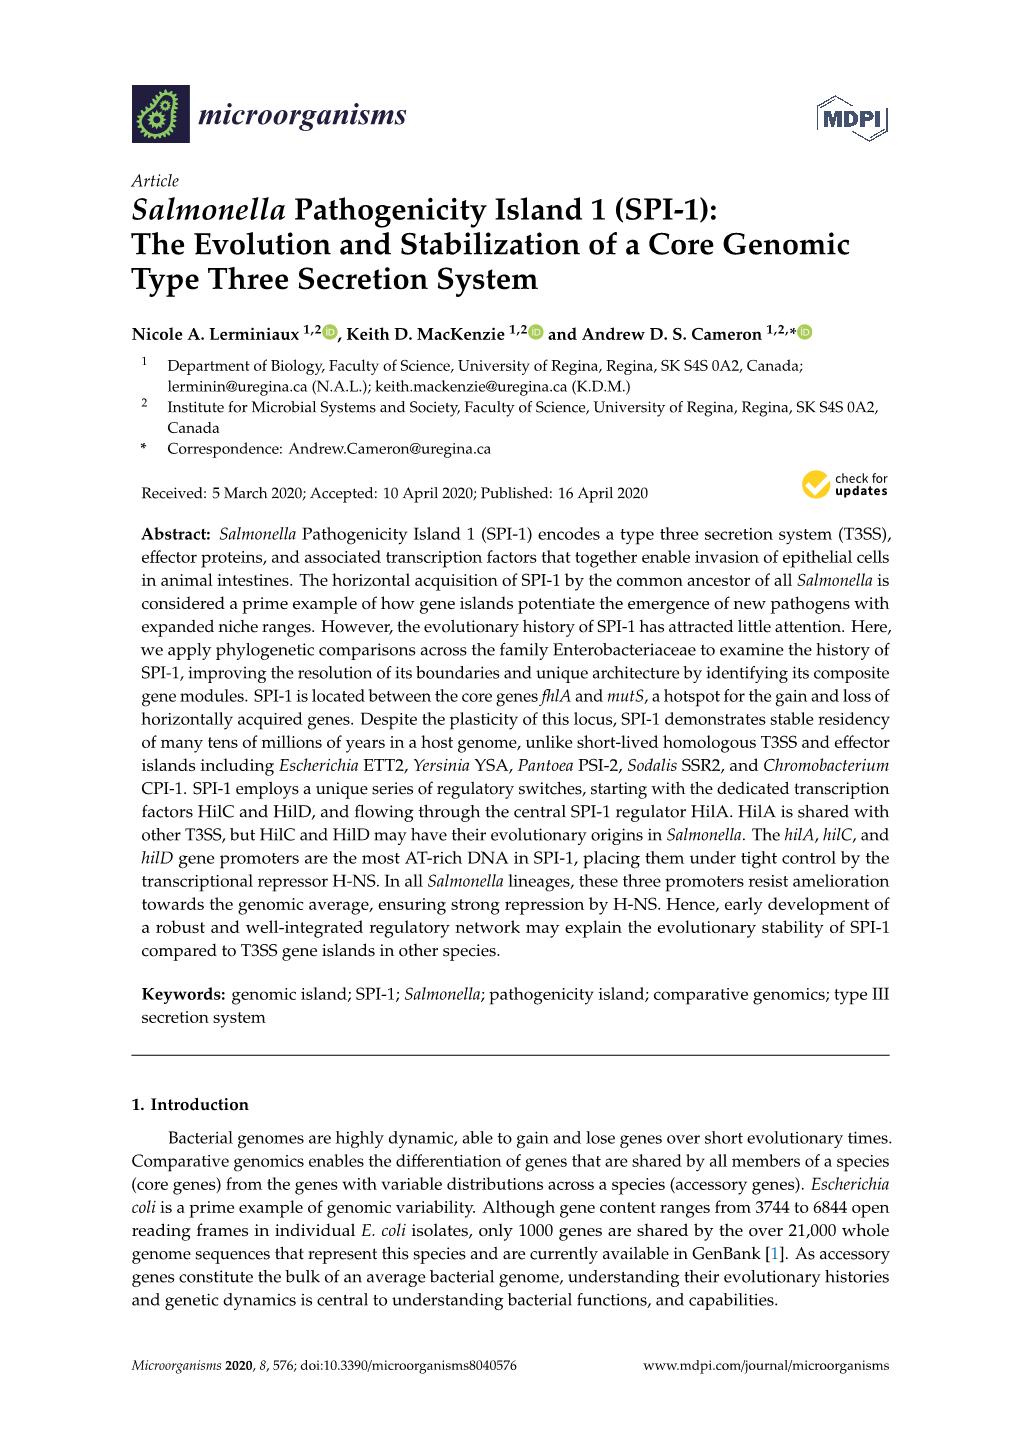 Salmonella Pathogenicity Island 1 (SPI-1): the Evolution and Stabilization of a Core Genomic Type Three Secretion System